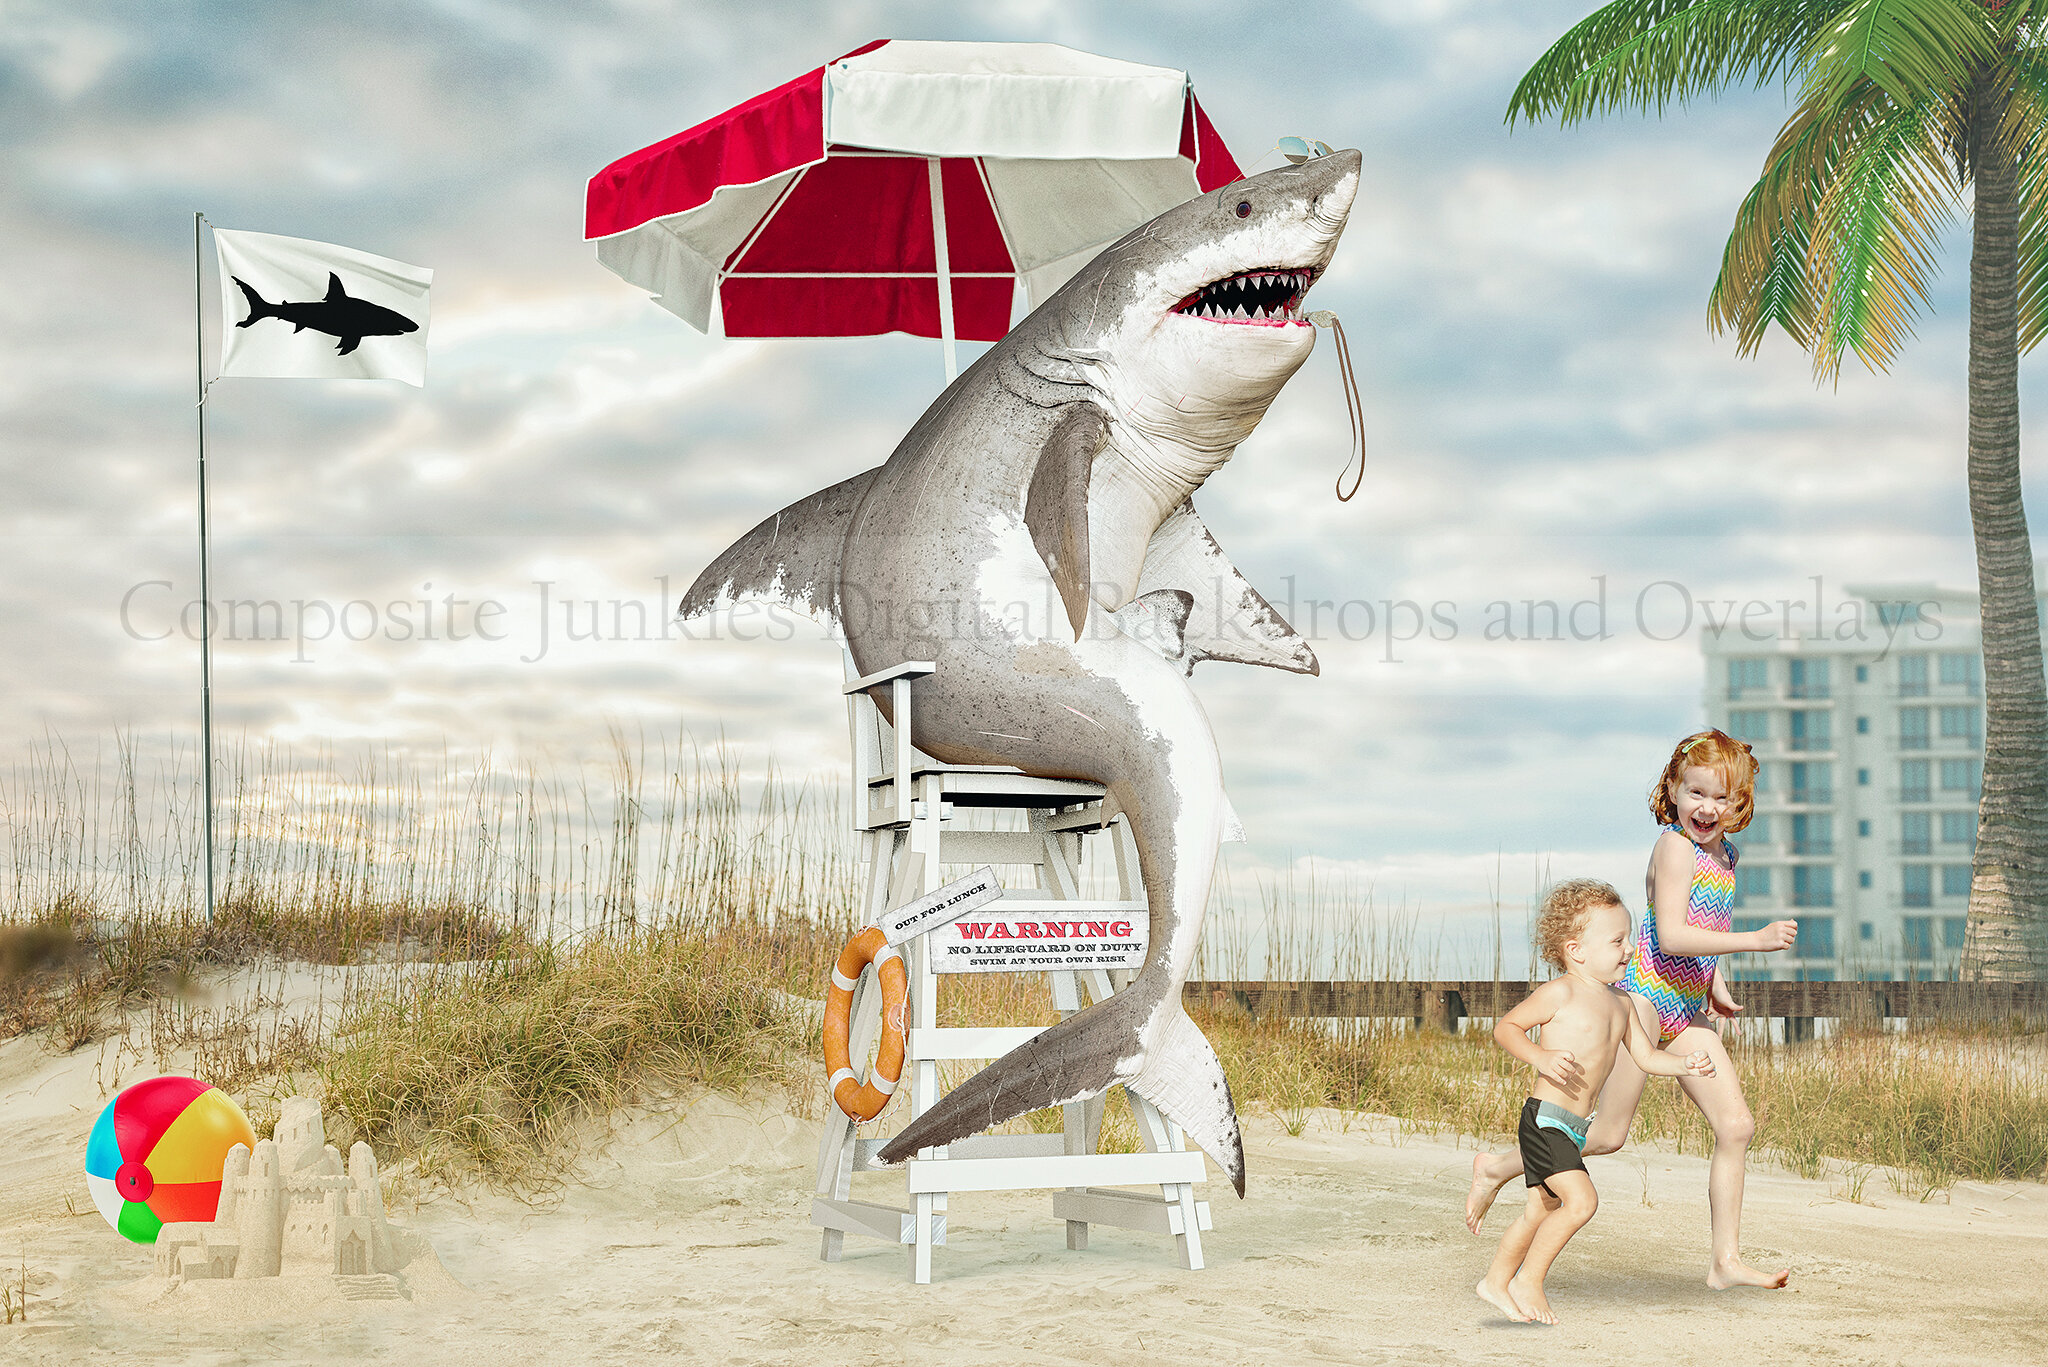 Composite Junkies 2021 - Shark Lifeguard - Model Logo.jpg